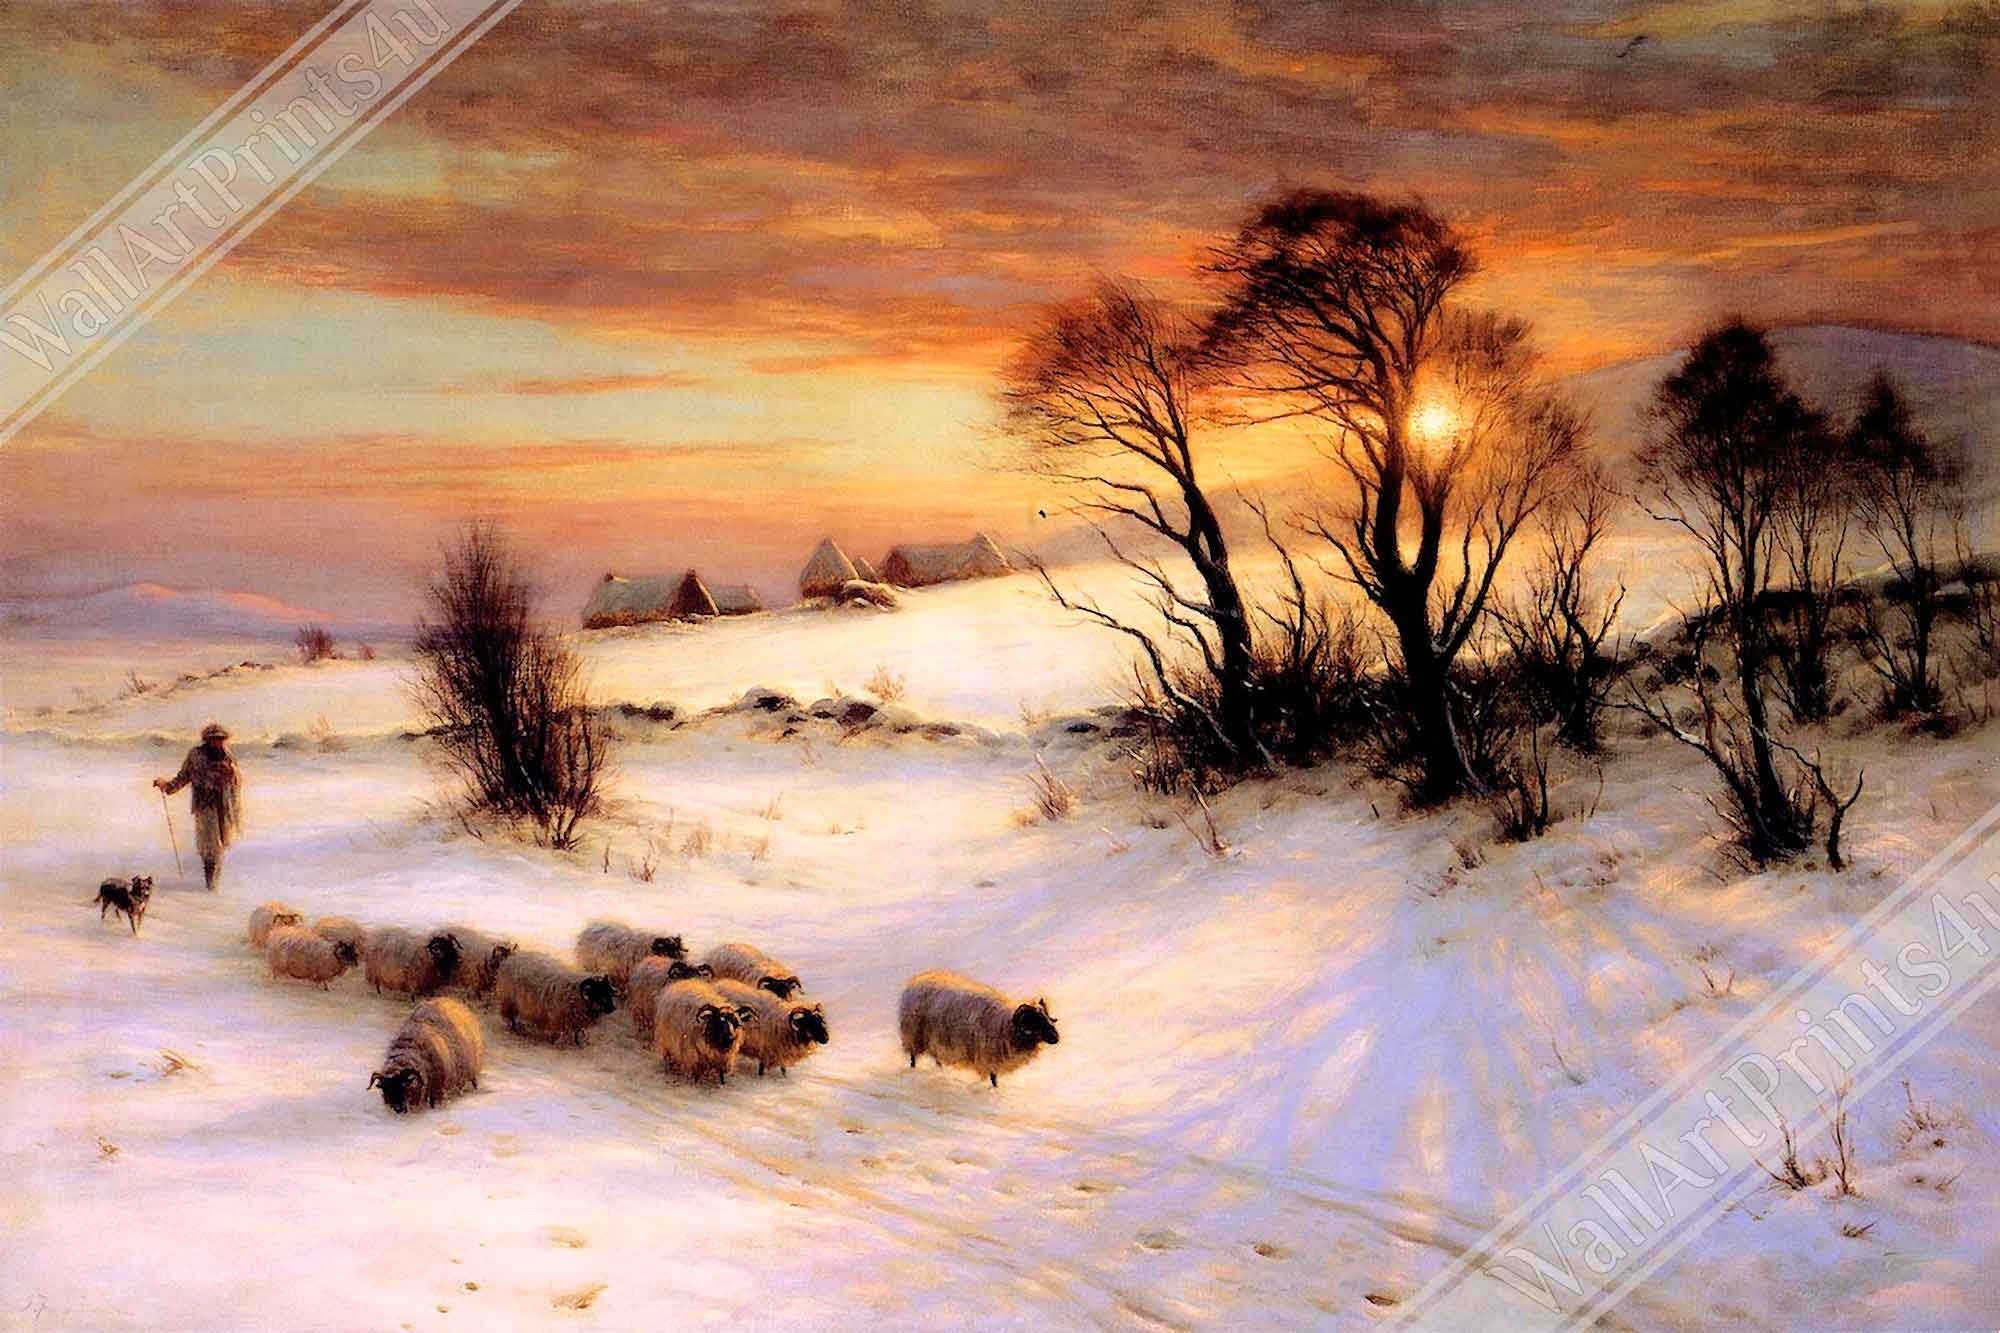 Vintage Winter Poster Print, Herding Sheep In A Winter Landscape At Sunset, Joseph Farquharson 1903 - WallArtPrints4U